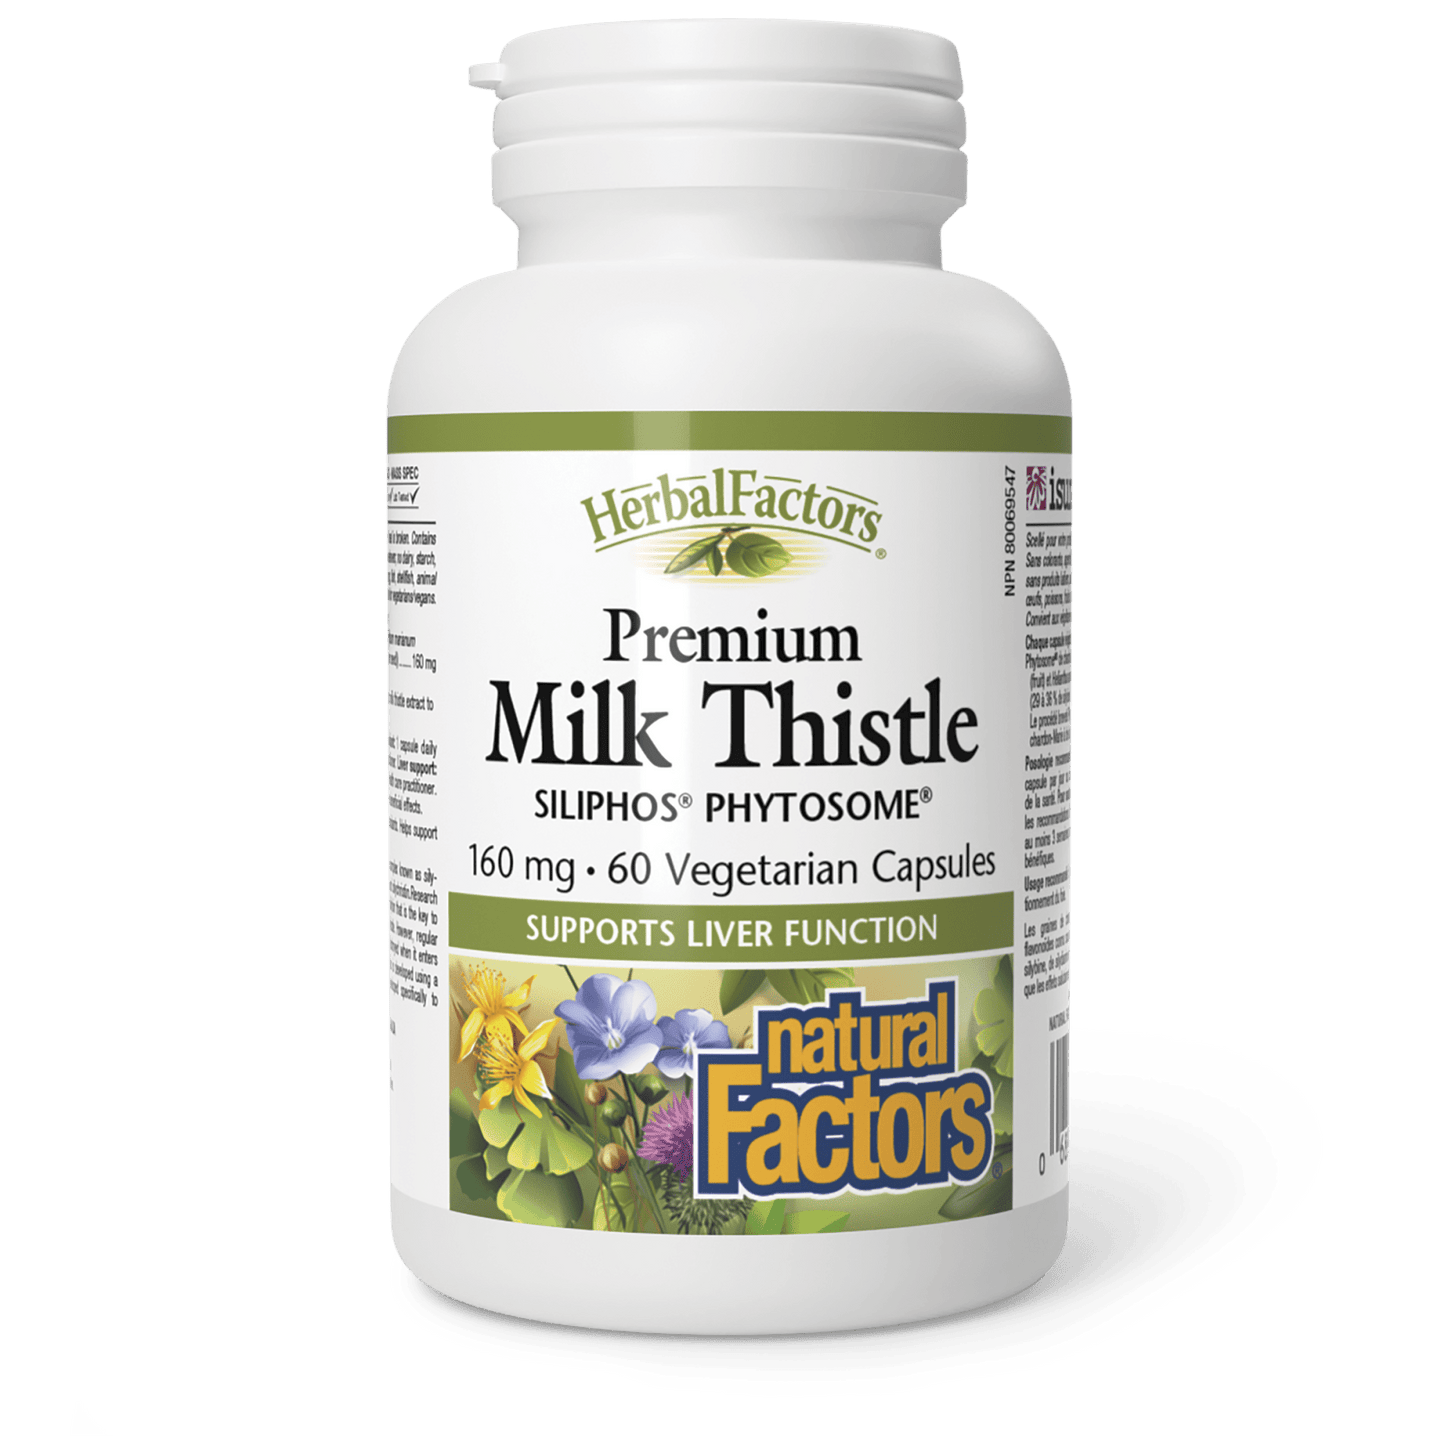 Premium Milk Thistle Siliphos Phytosome 160 mg, HerbalFactors, Natural Factors|v|image|1757